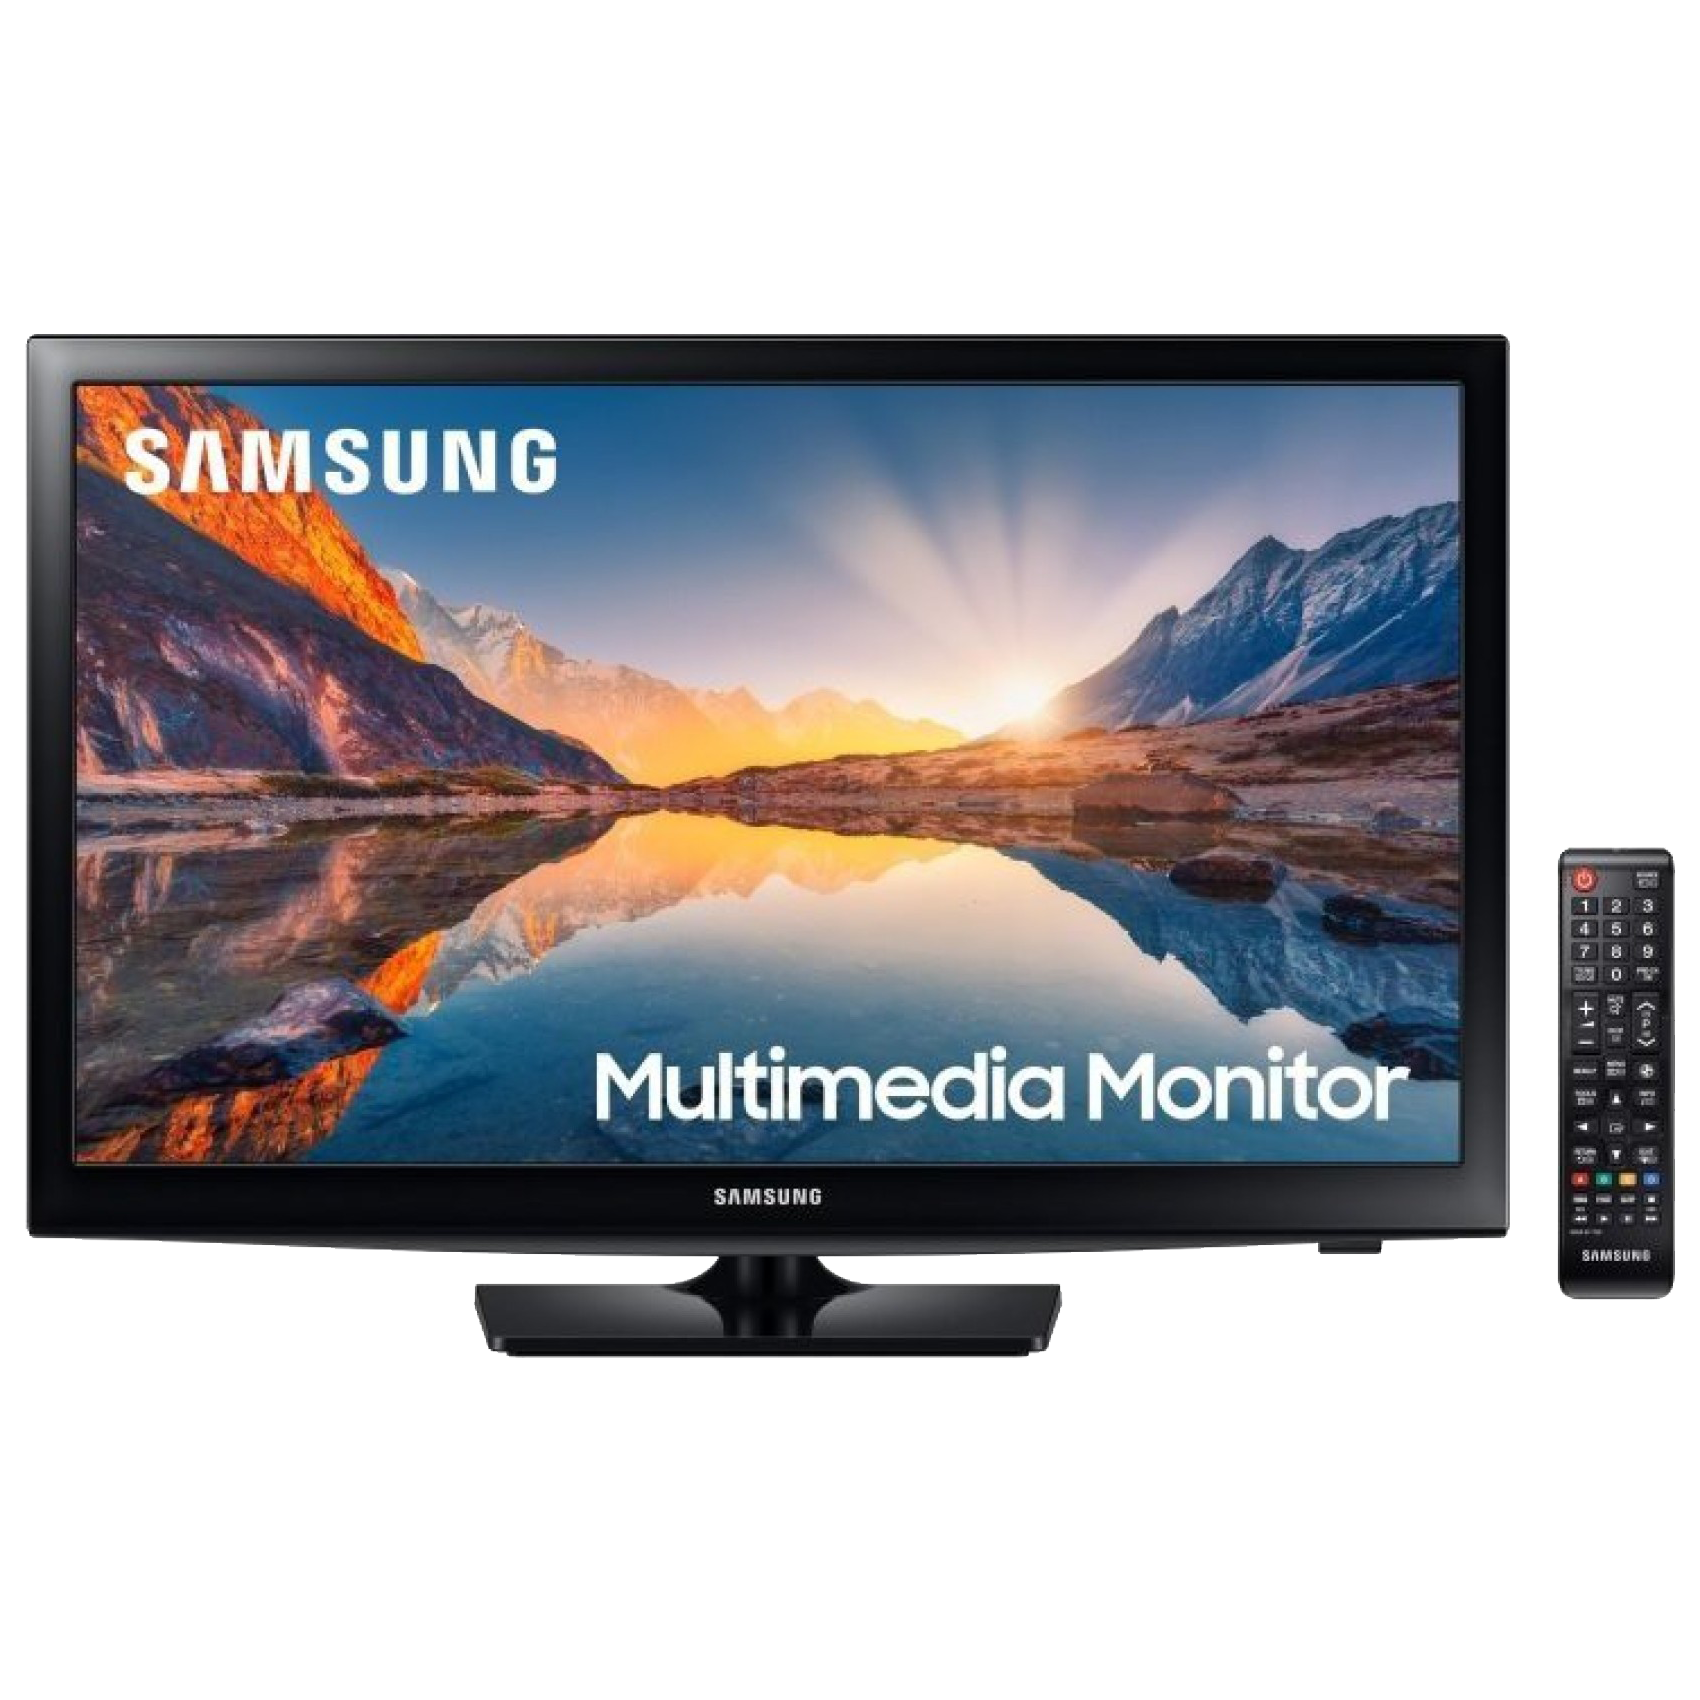 Samsung 59.79 cm (23.54 Inches) HD LED Monitor (LS24R39MHAWXXL, Black)_1